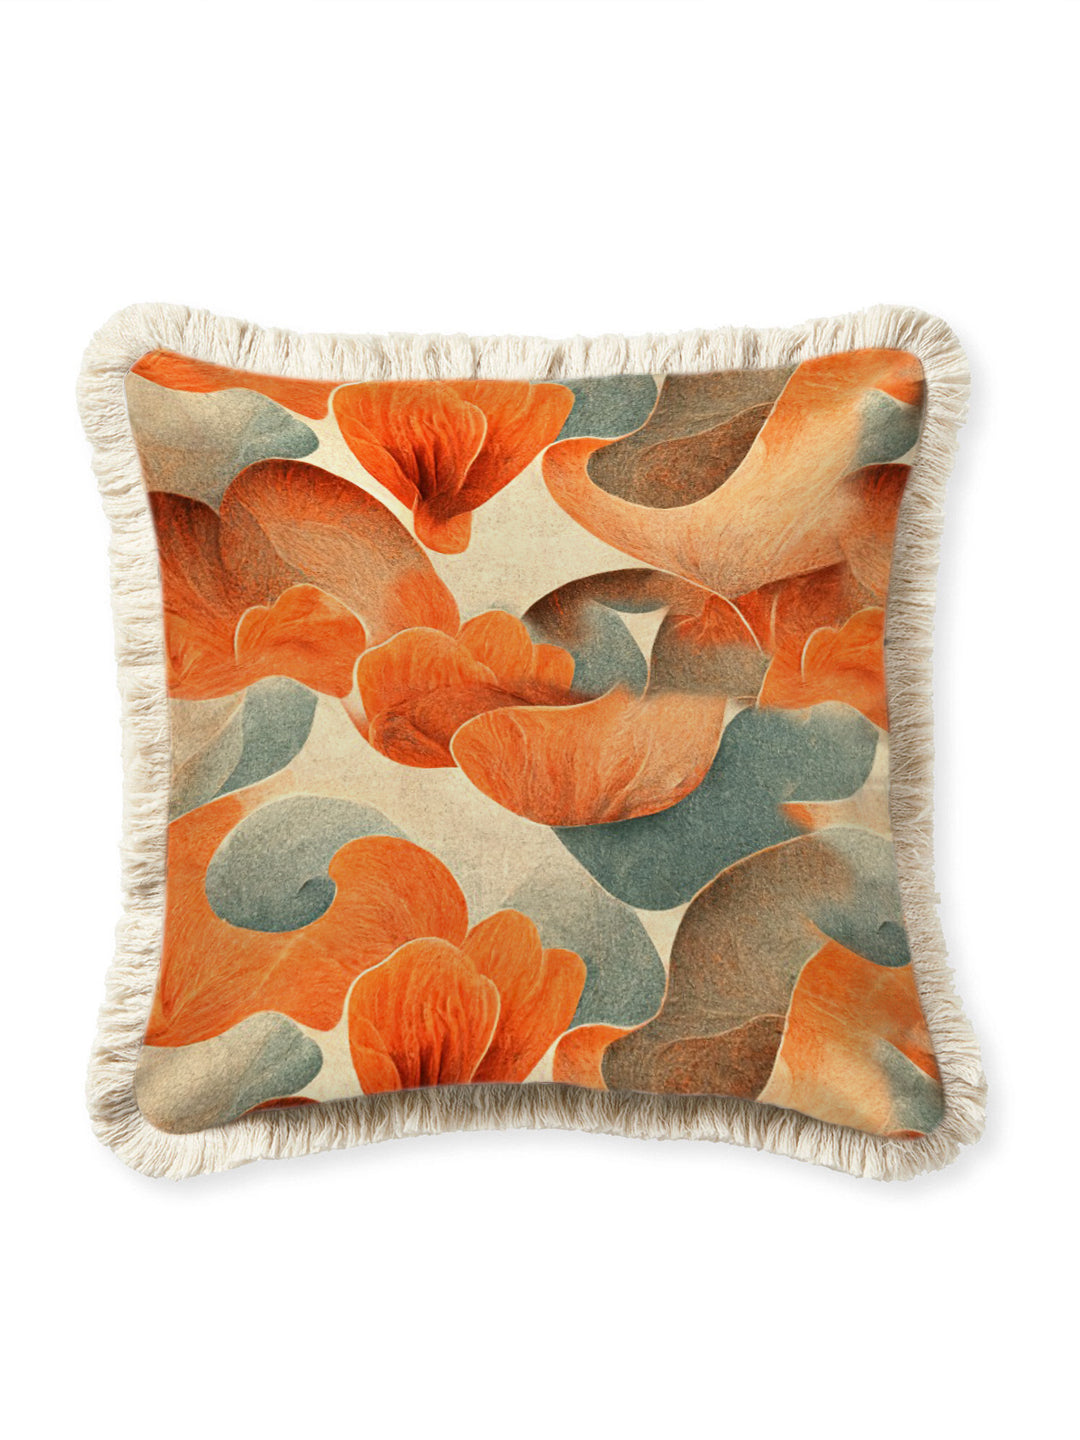 Orange Cushion Cover